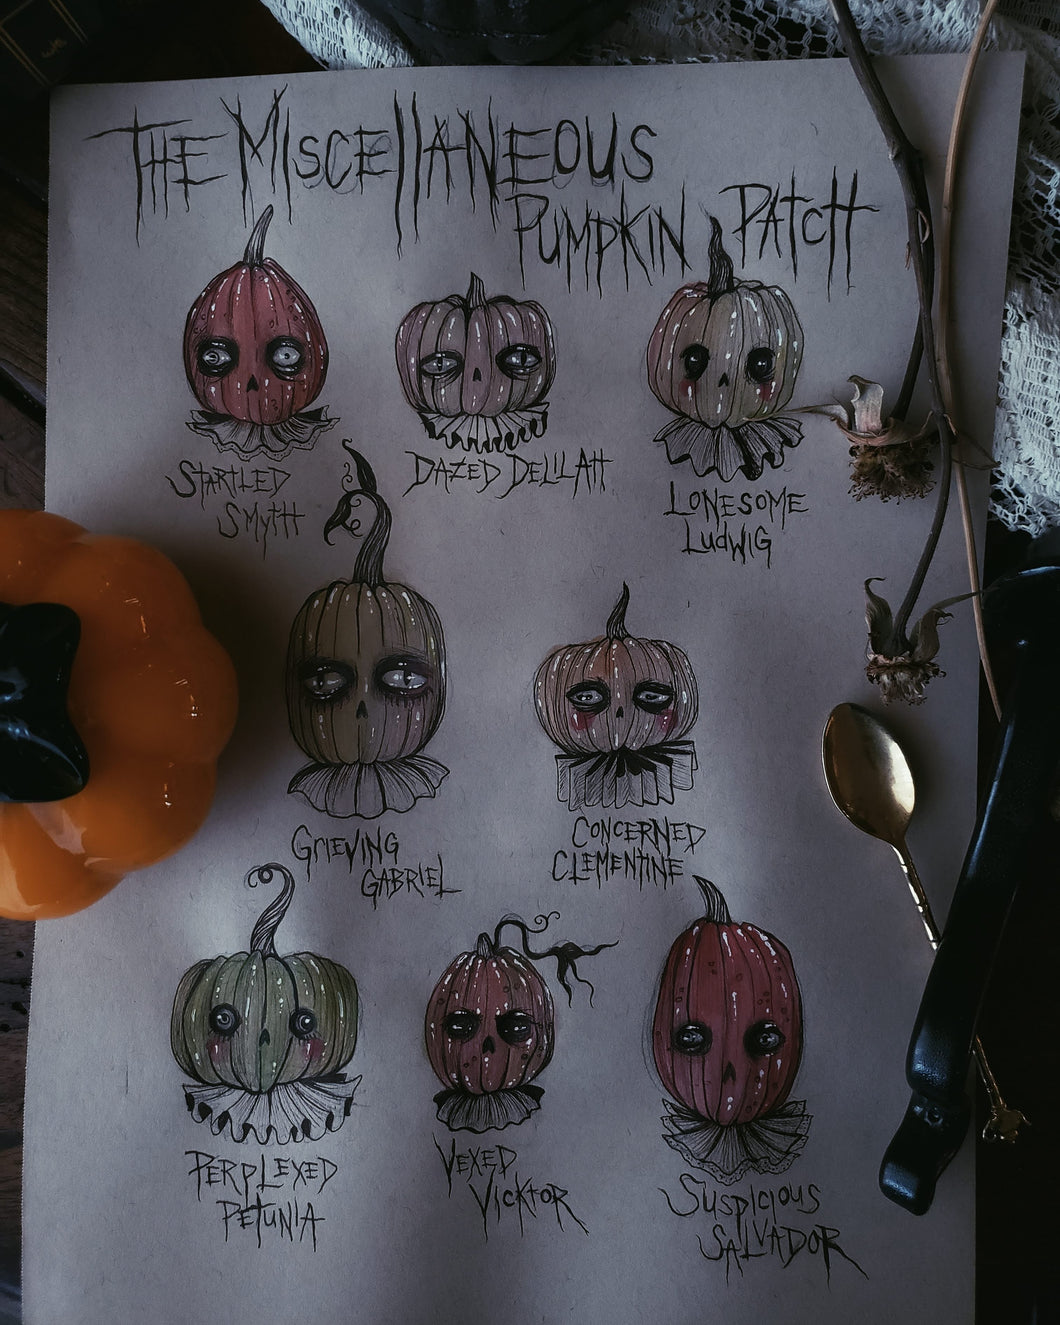 The Miscellaneous Pumpkin Patch